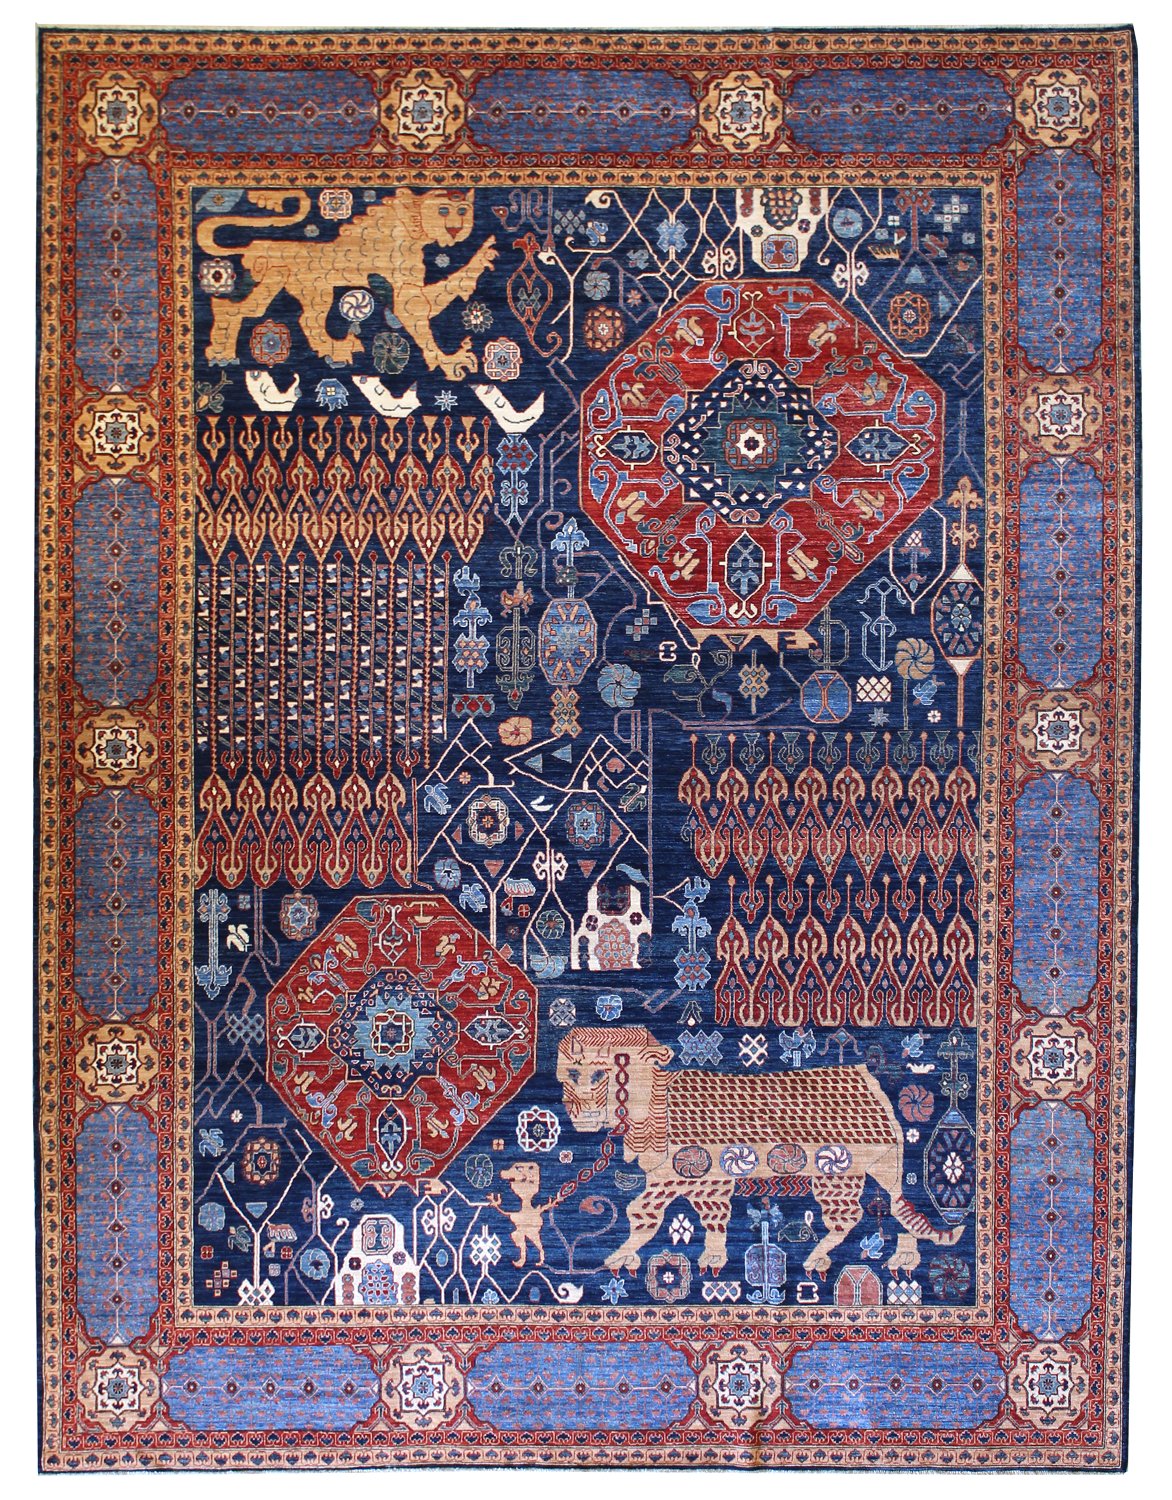 Lion Mamluk Handwoven Tribal Rug